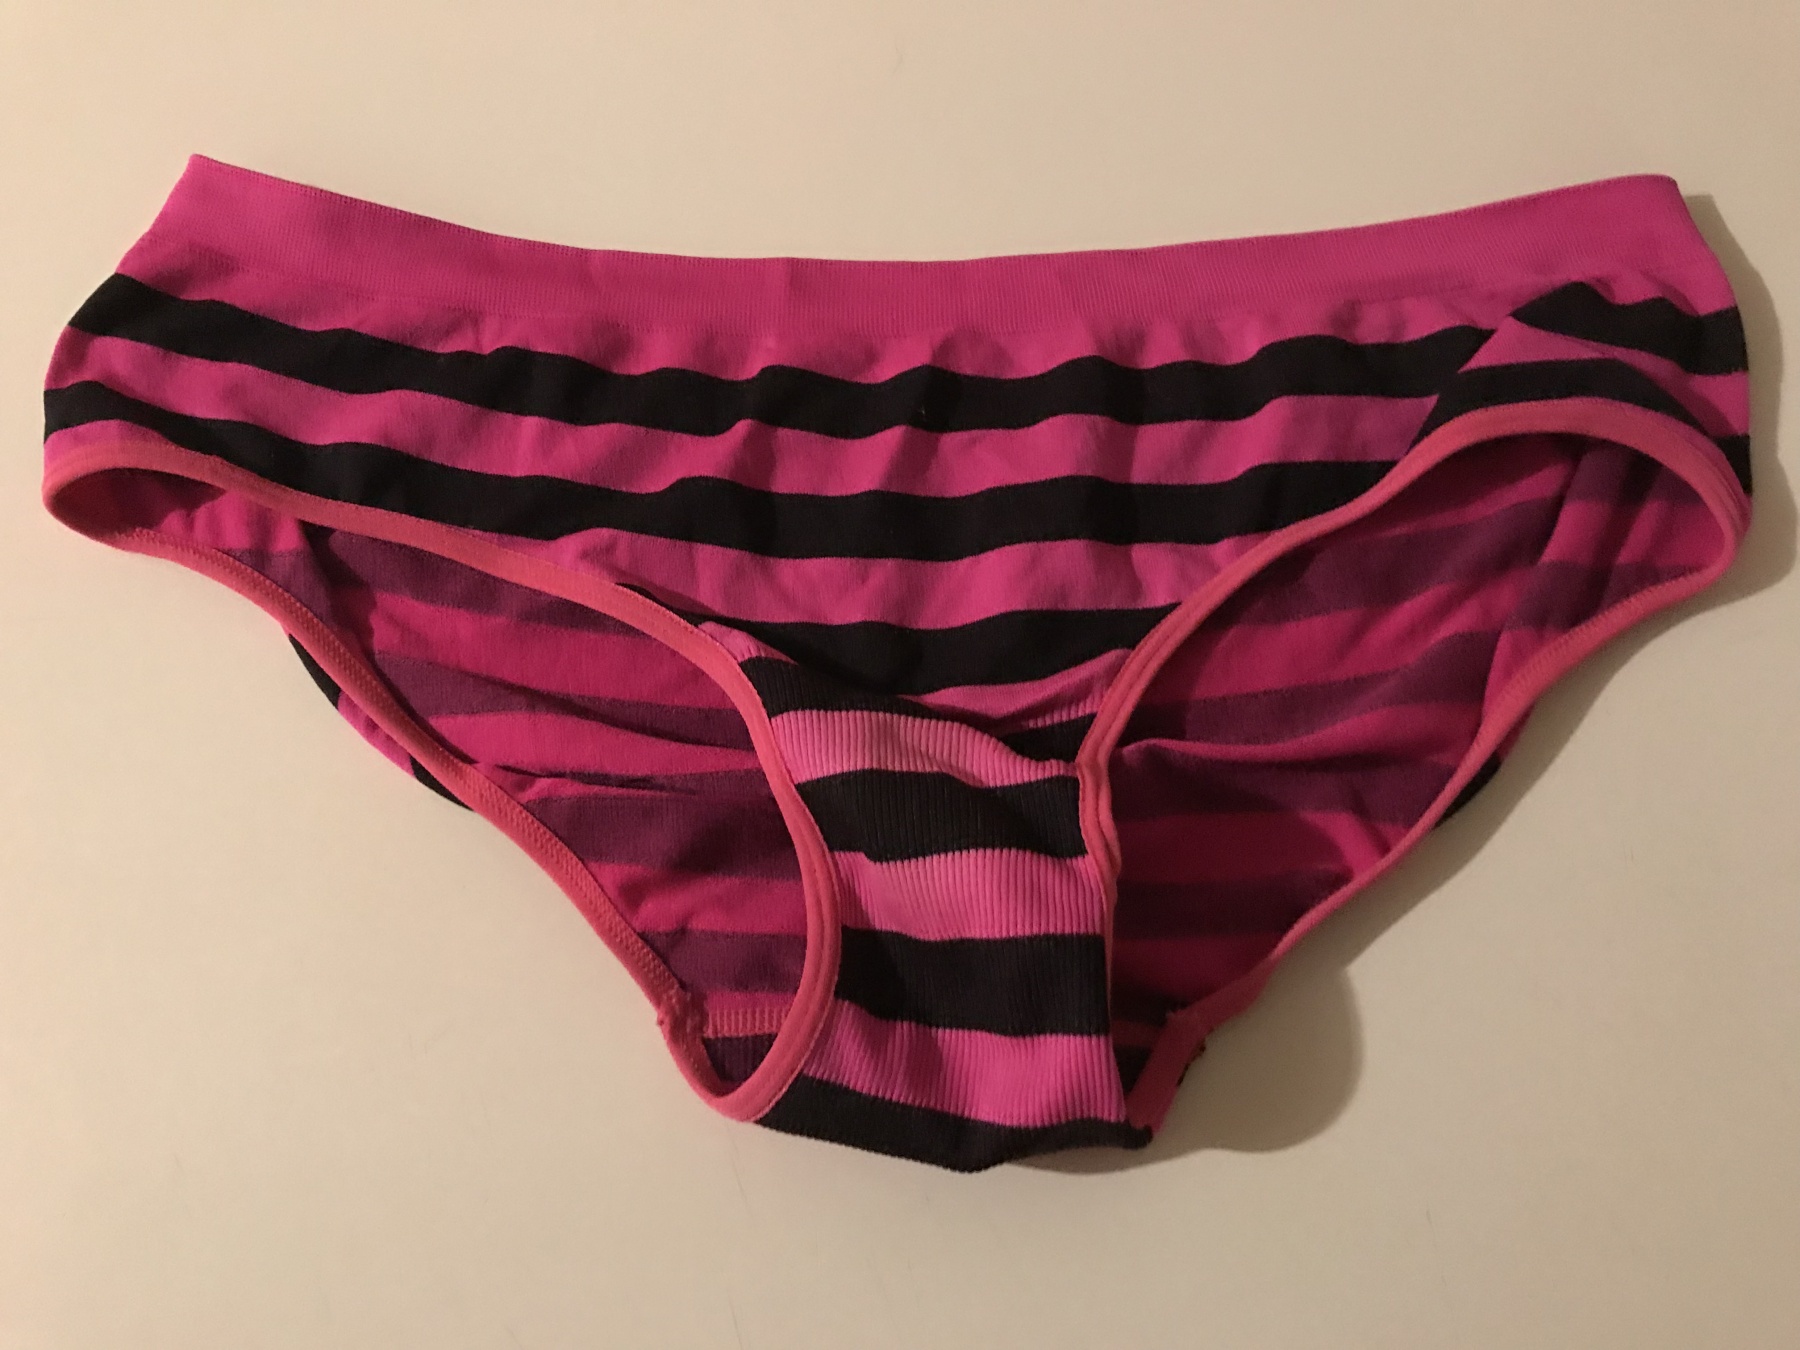 Beautiful pink and black striped panties.